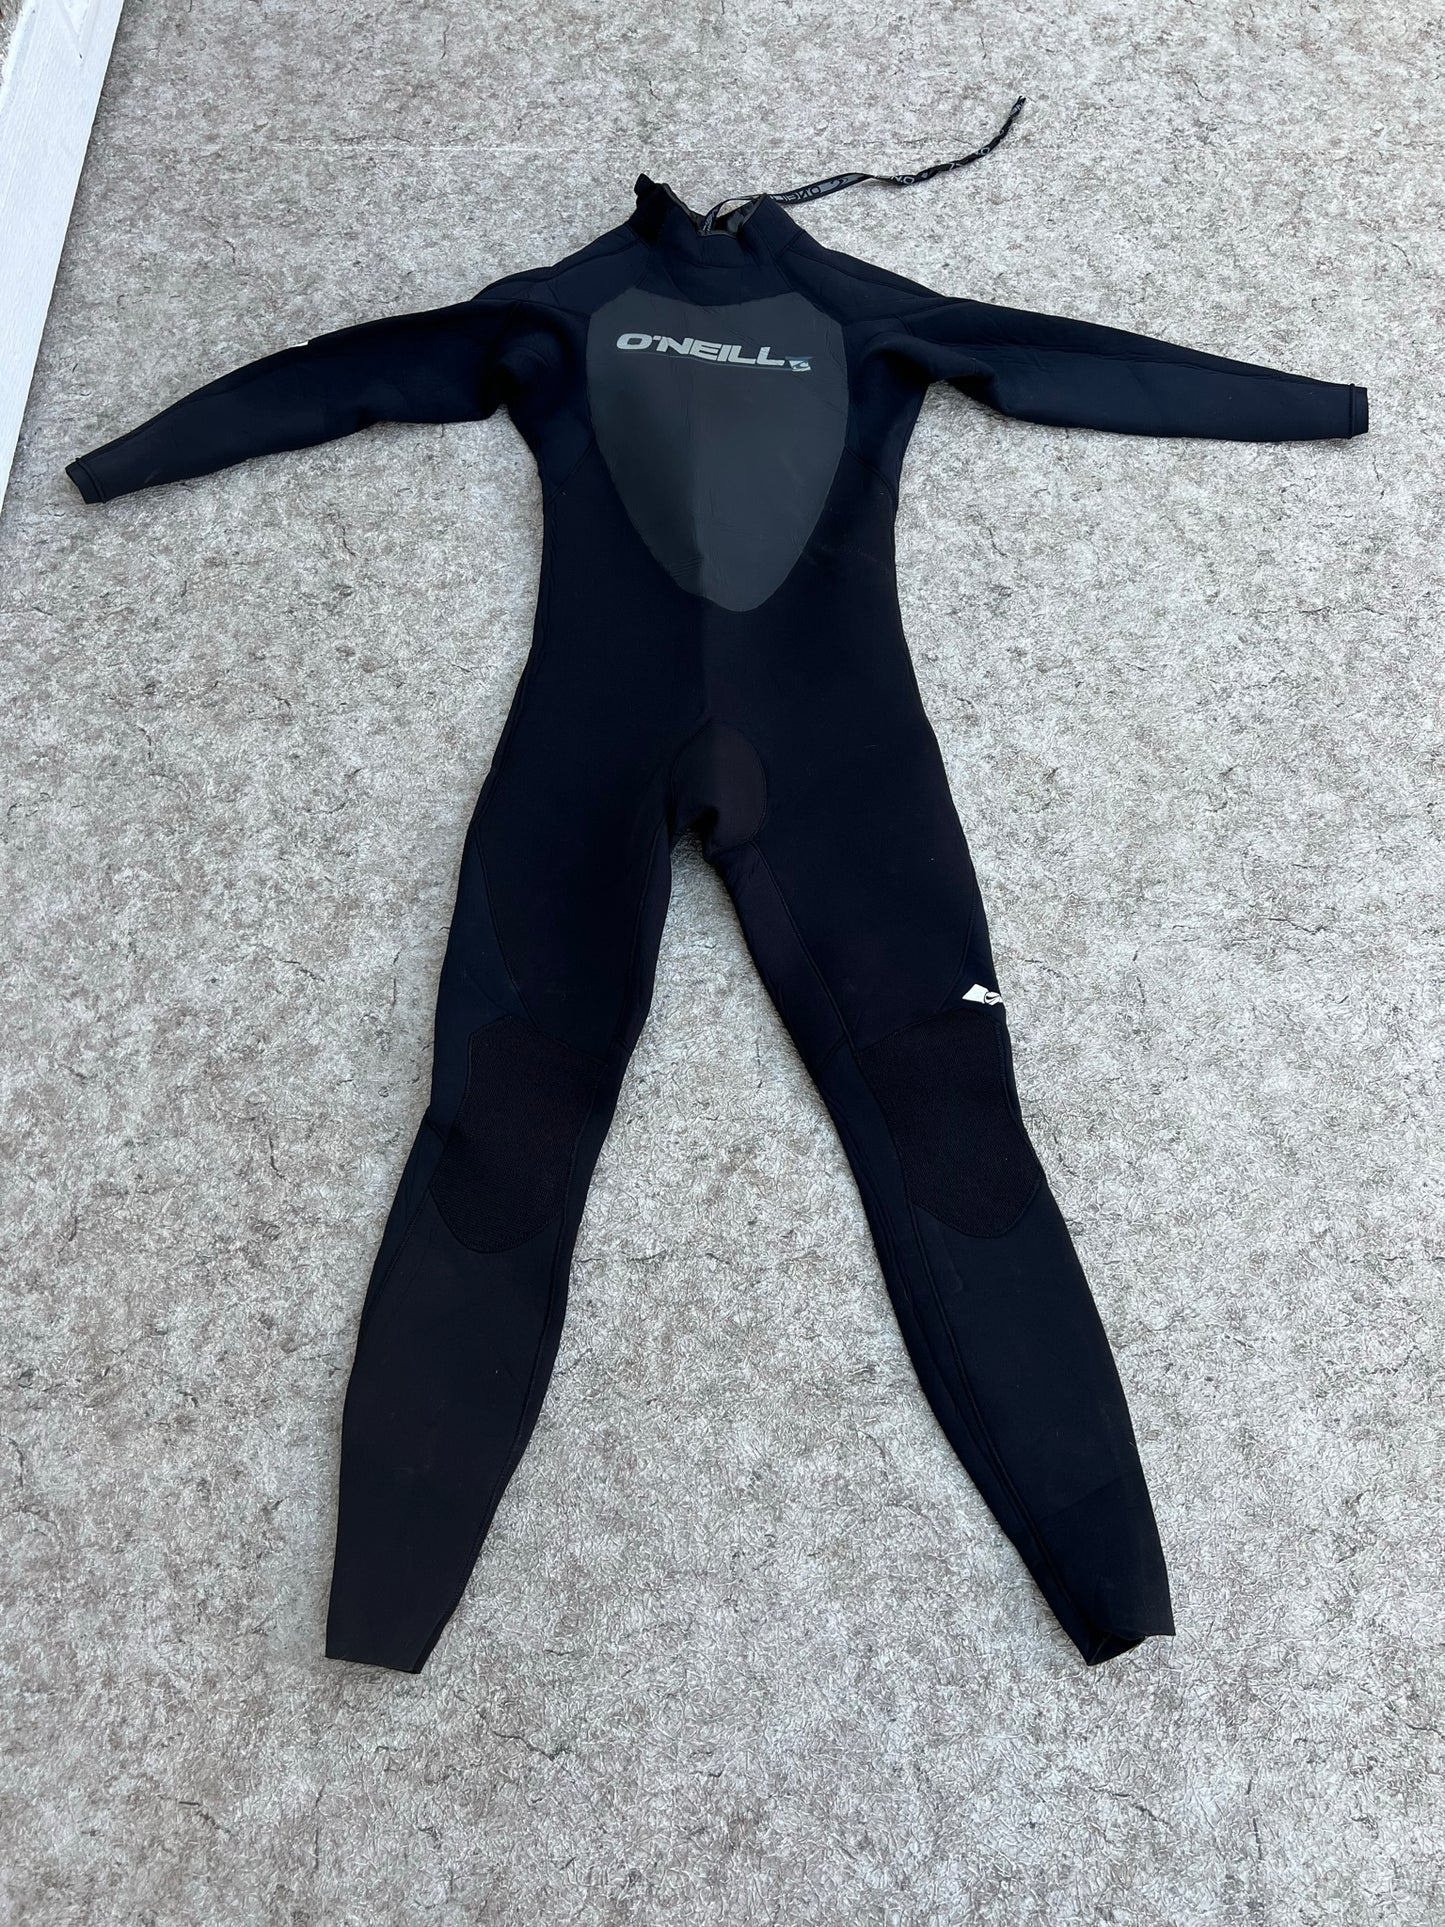 Wetsuit Men's Size Small Oneill Full 4-3 mm Neoprene Black Excellent